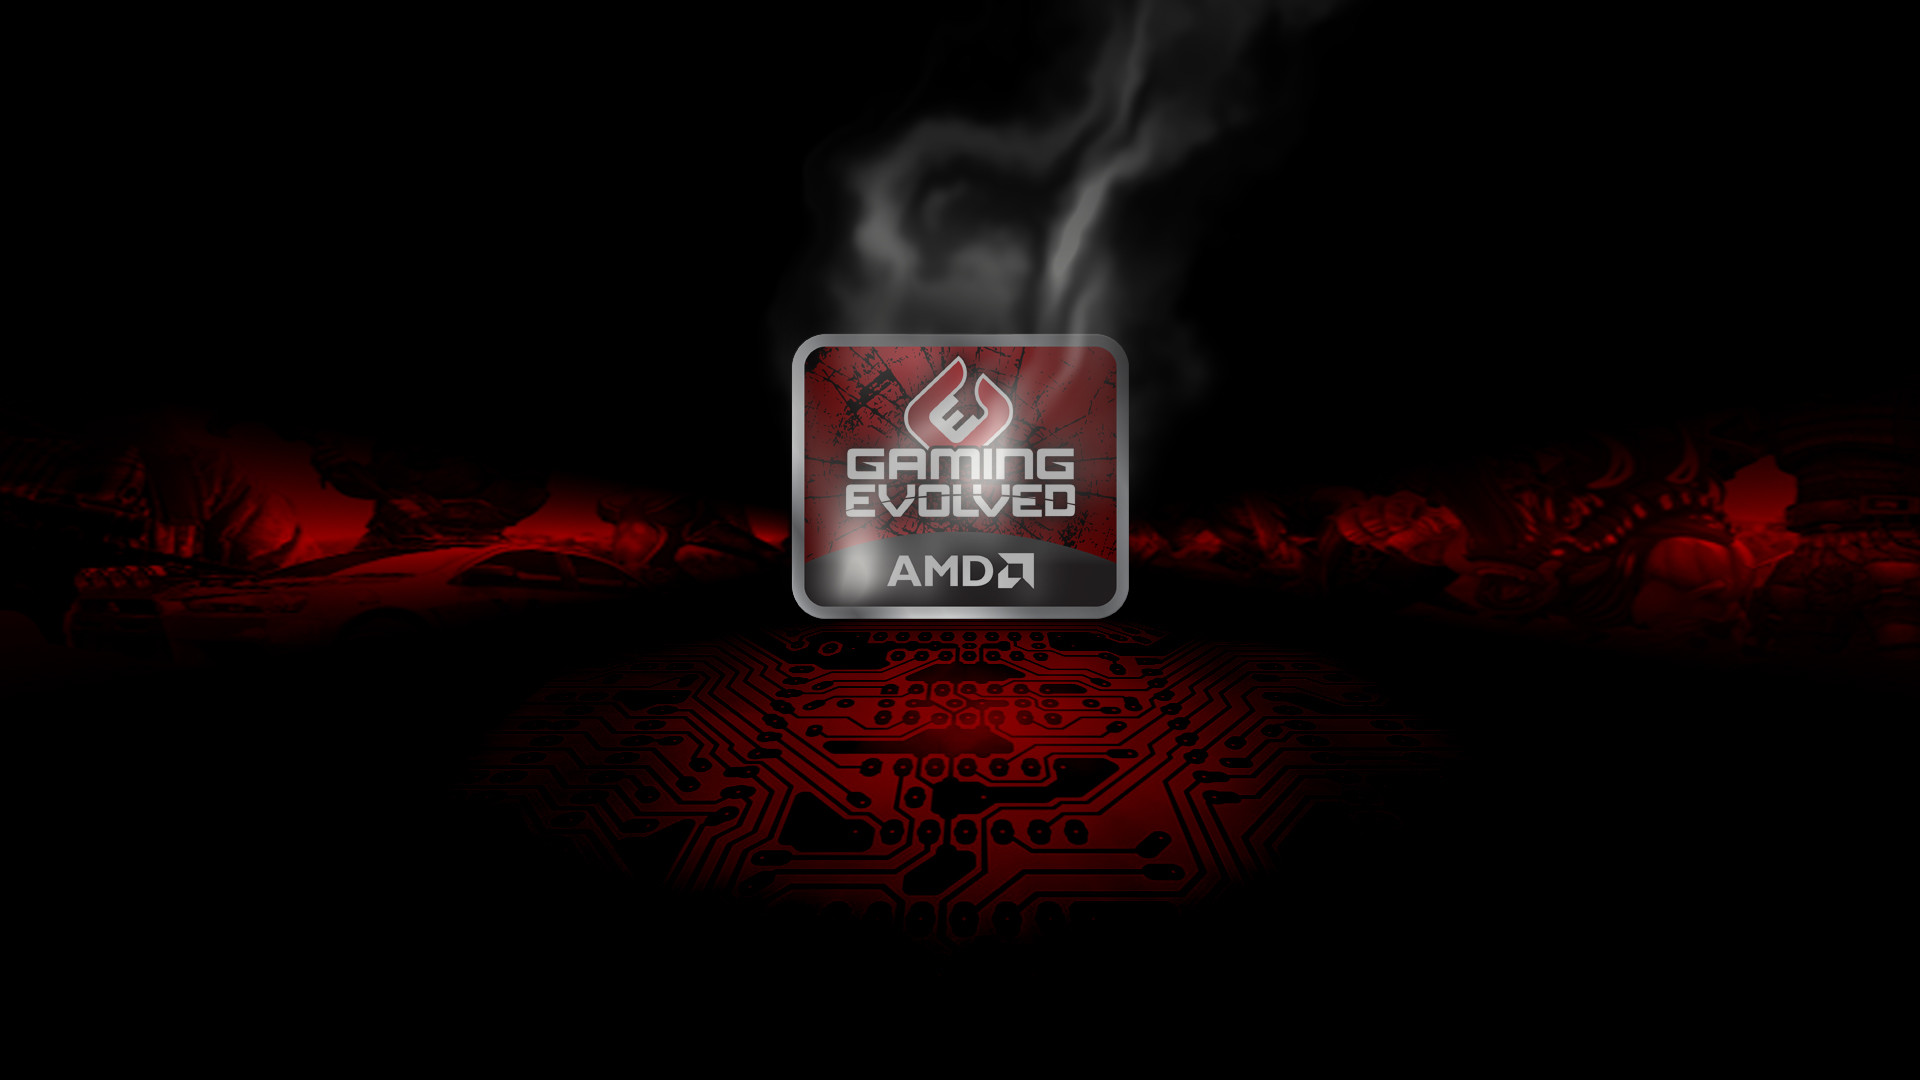 AMD HD Wallpaper 81 images